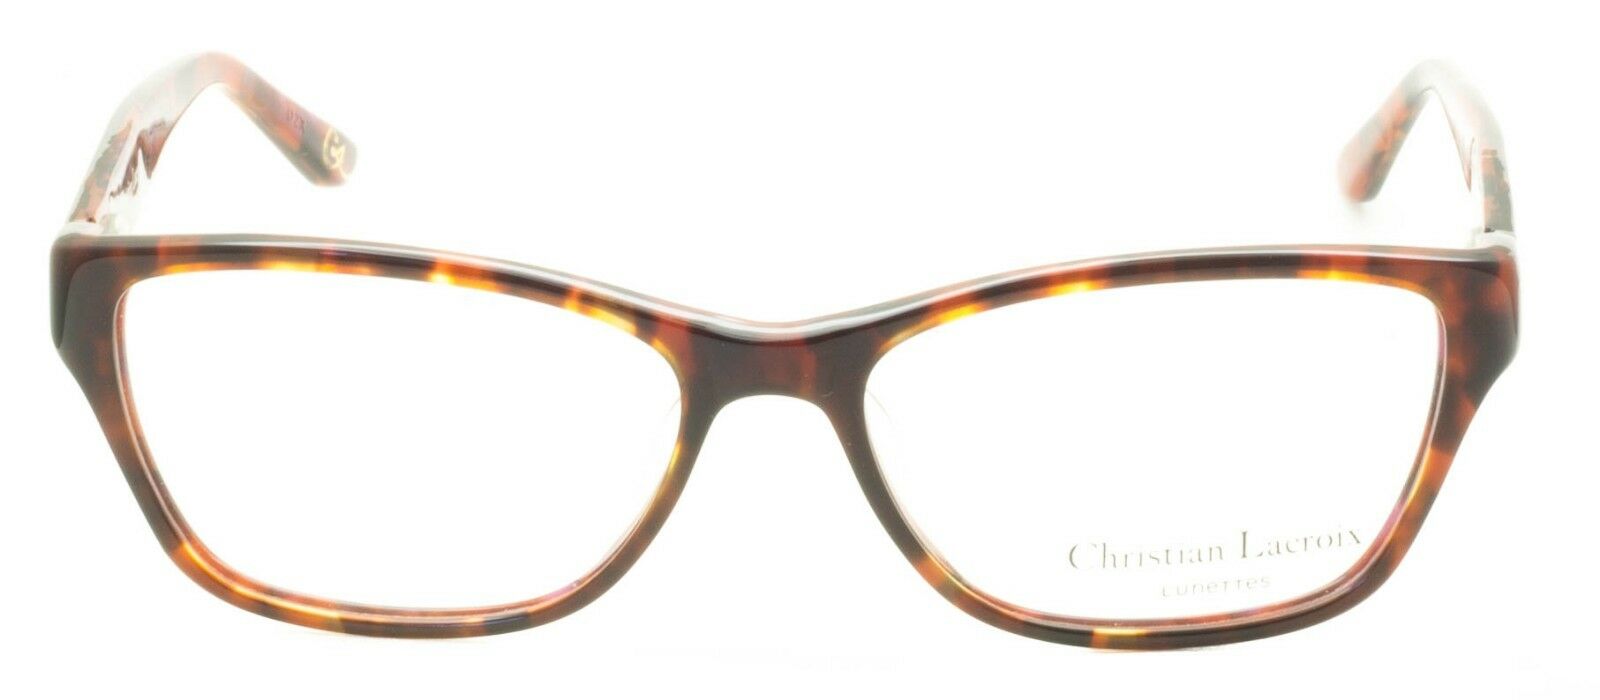 CHRISTIAN LACROIX CL 1015 126 Eyewear RX Optical FRAMES Eyeglasses Glasses BNIB